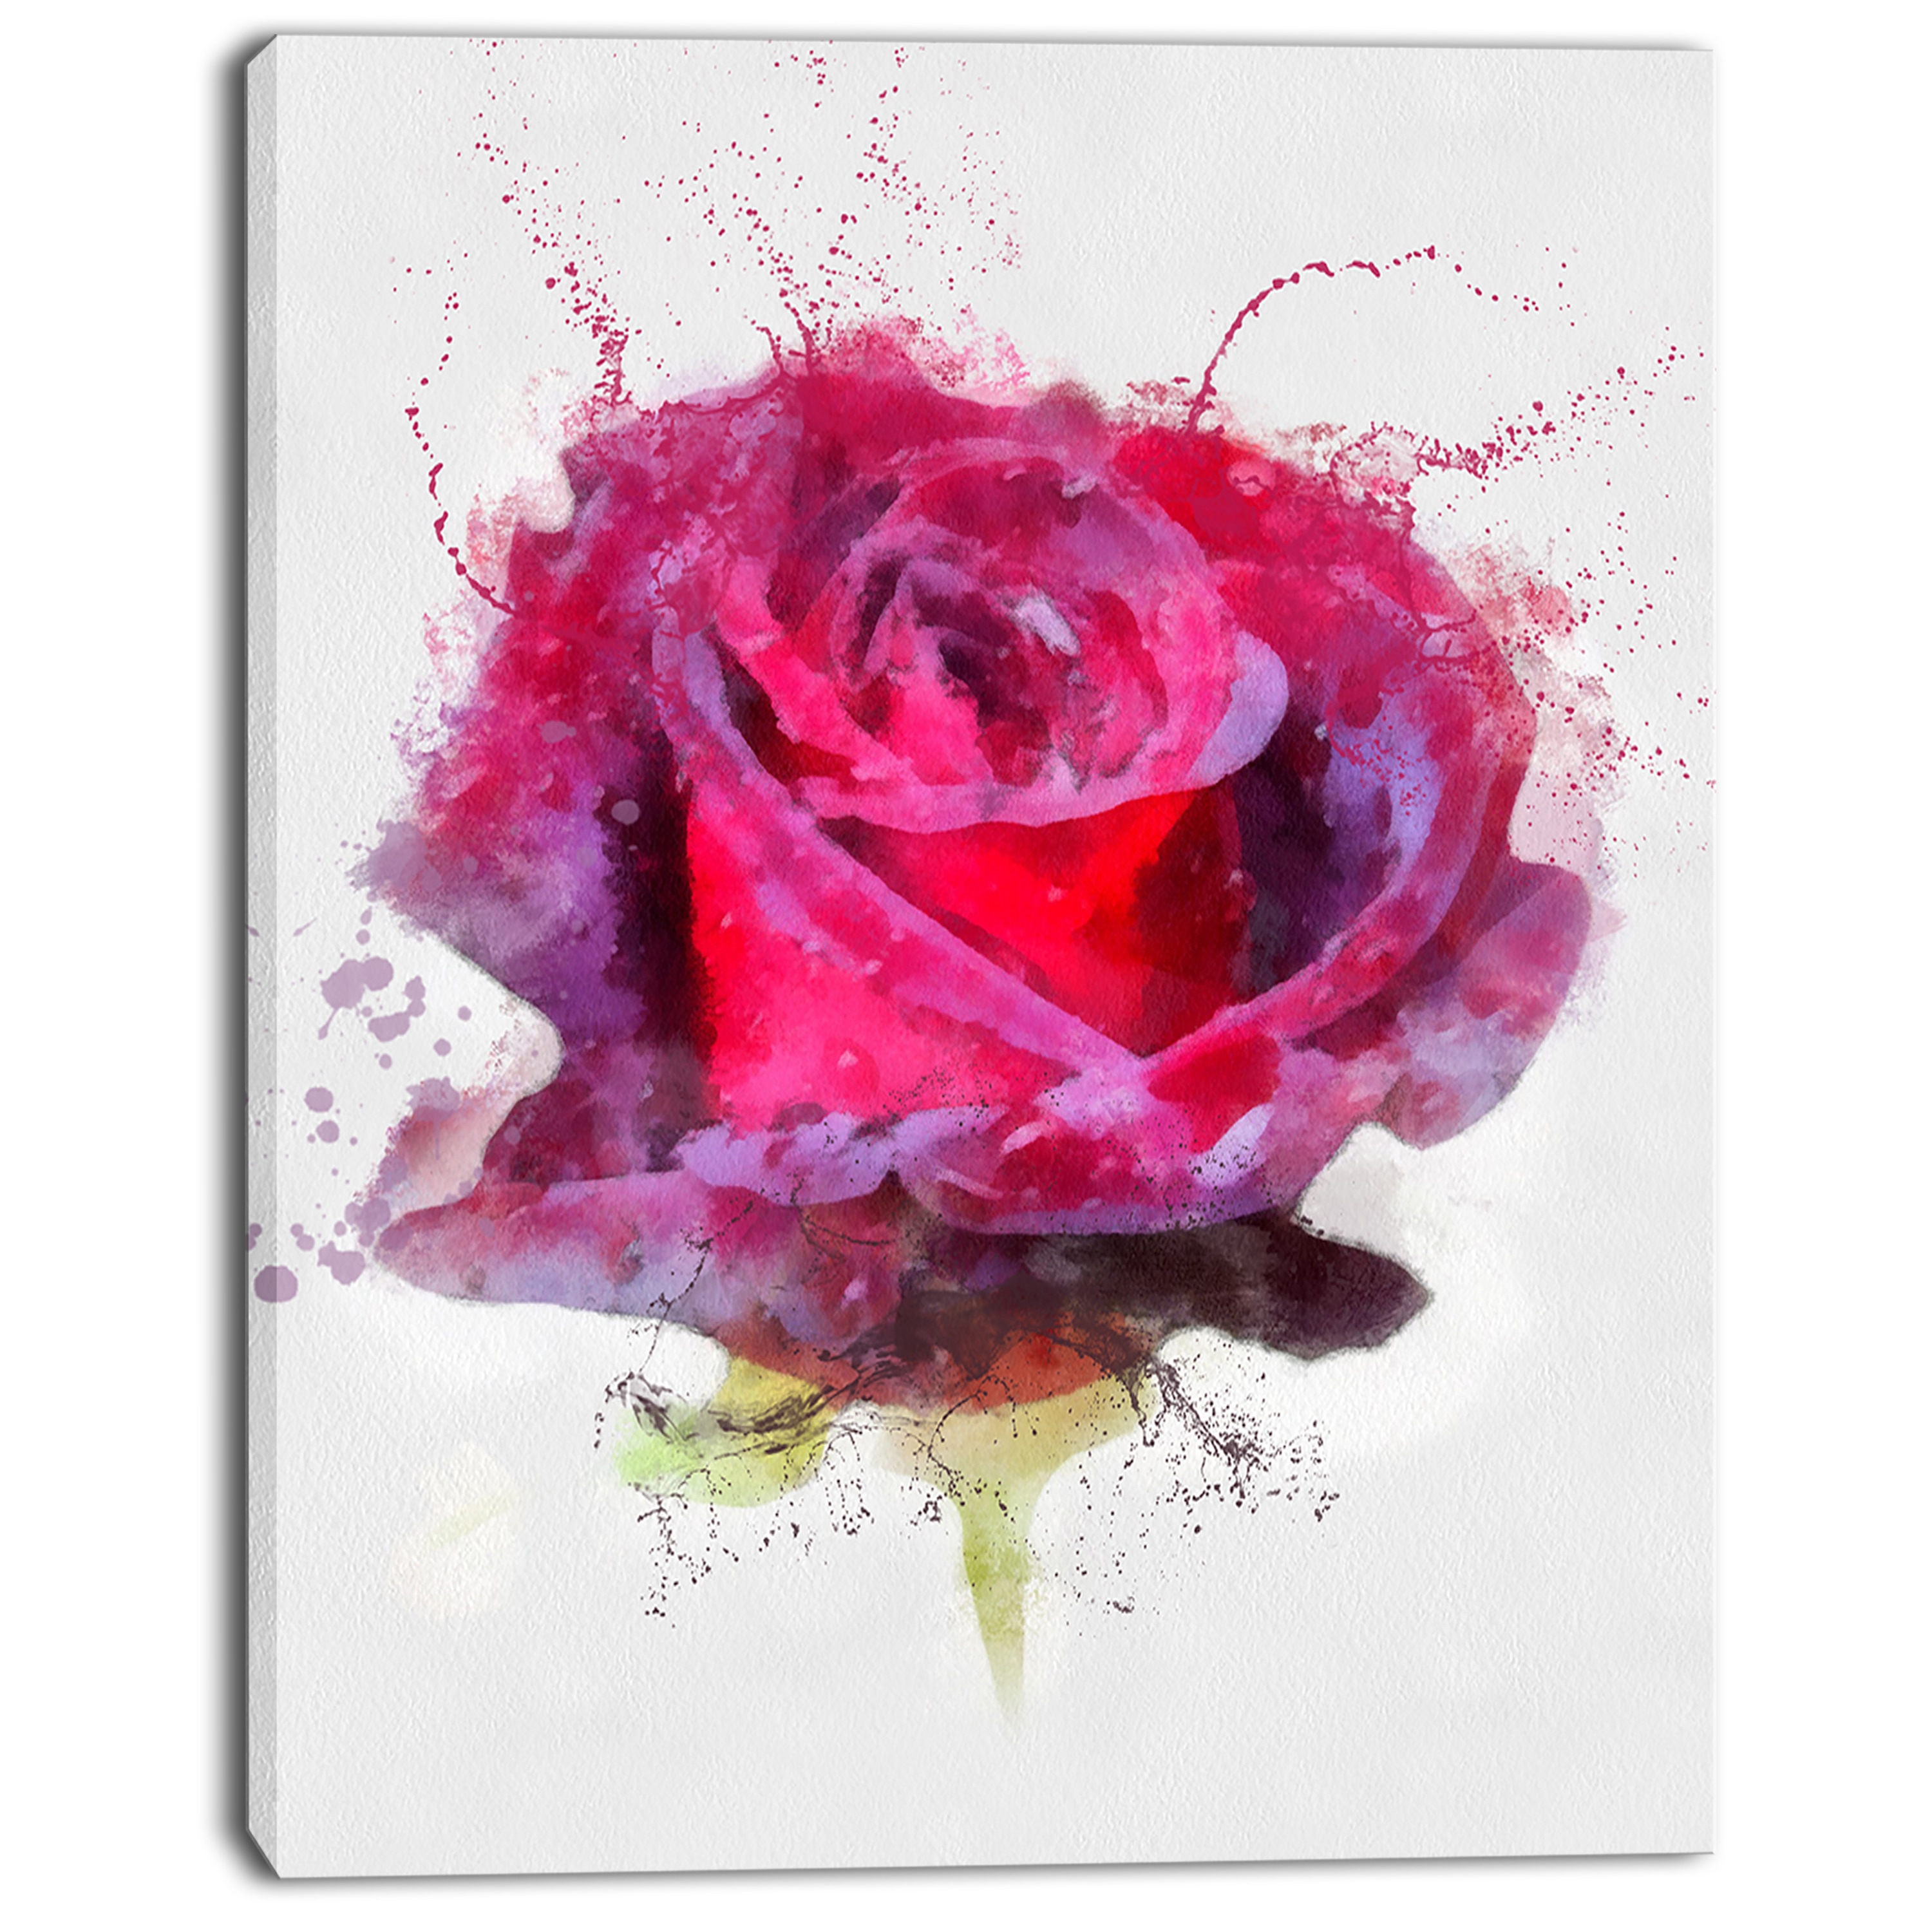 Goodinfo: Dark Red Red Rose Image Gallery